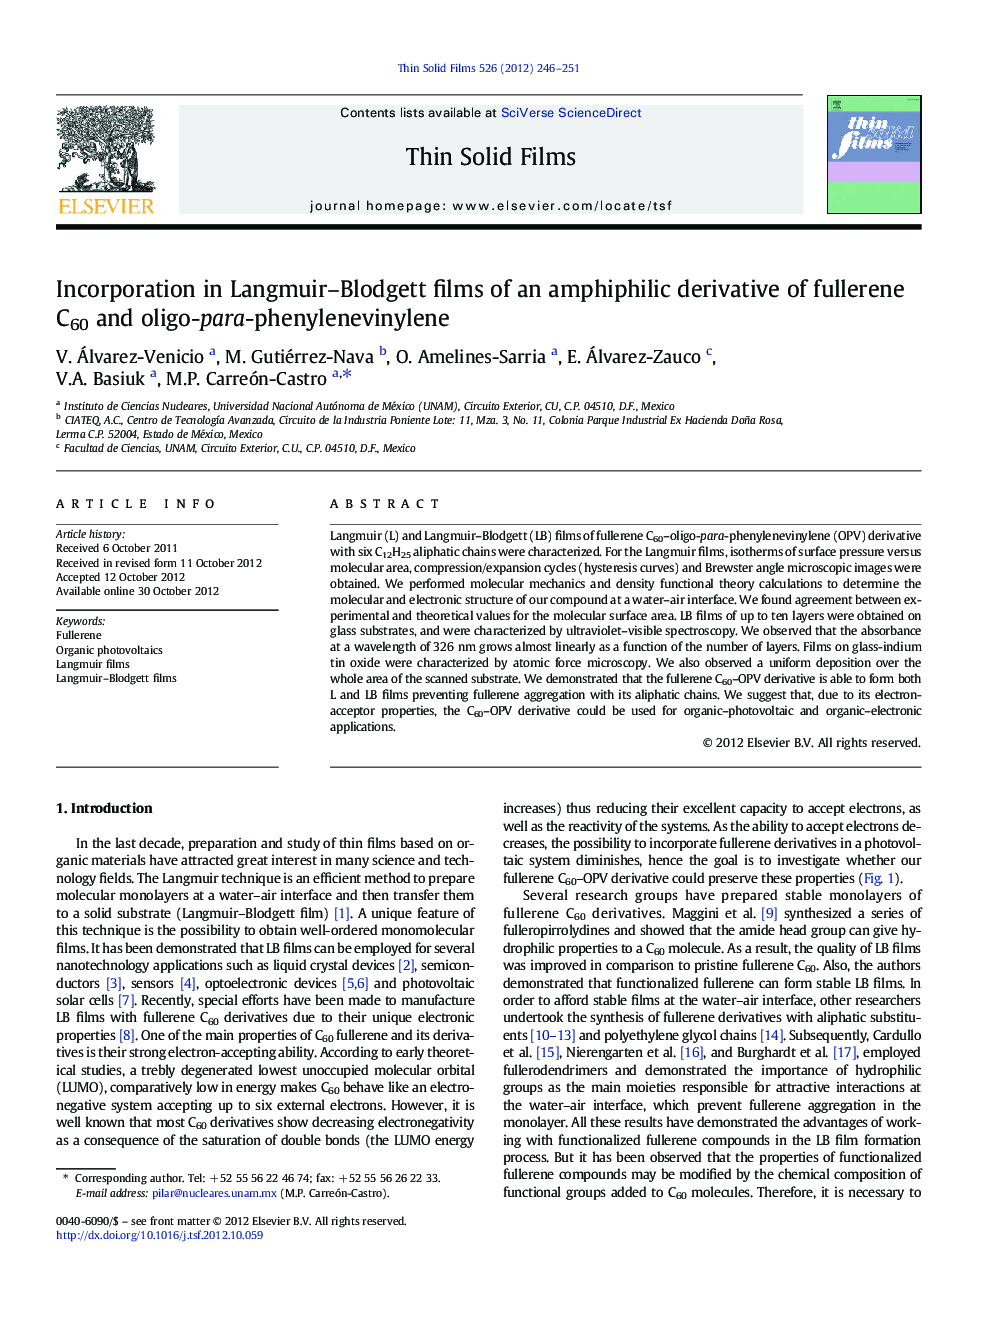 Incorporation in Langmuir–Blodgett films of an amphiphilic derivative of fullerene C60 and oligo-para-phenylenevinylene